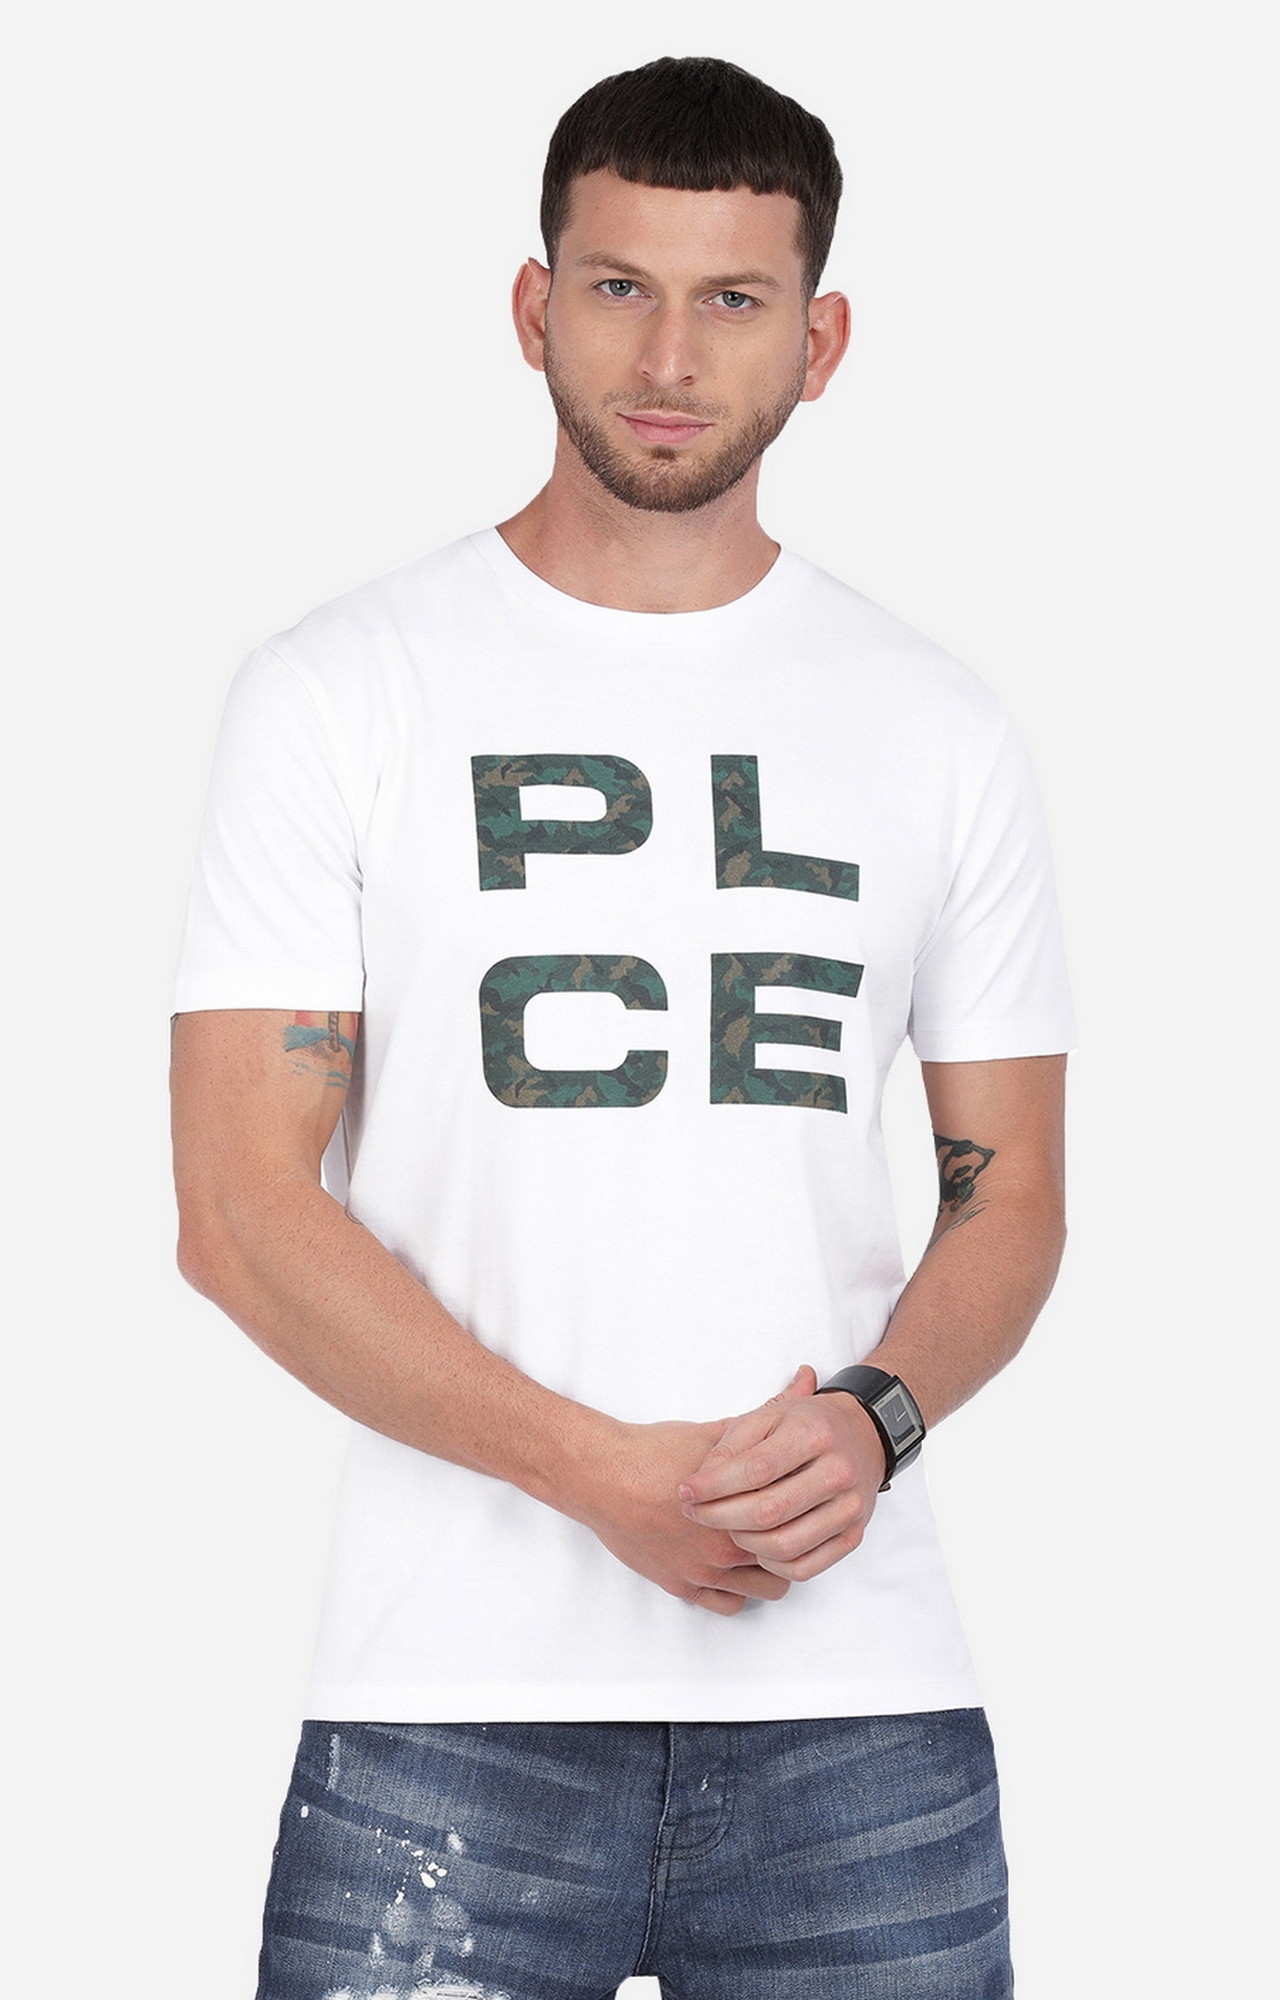 883 Police | Men's White Cotton Typographic Printed T-Shirt 0